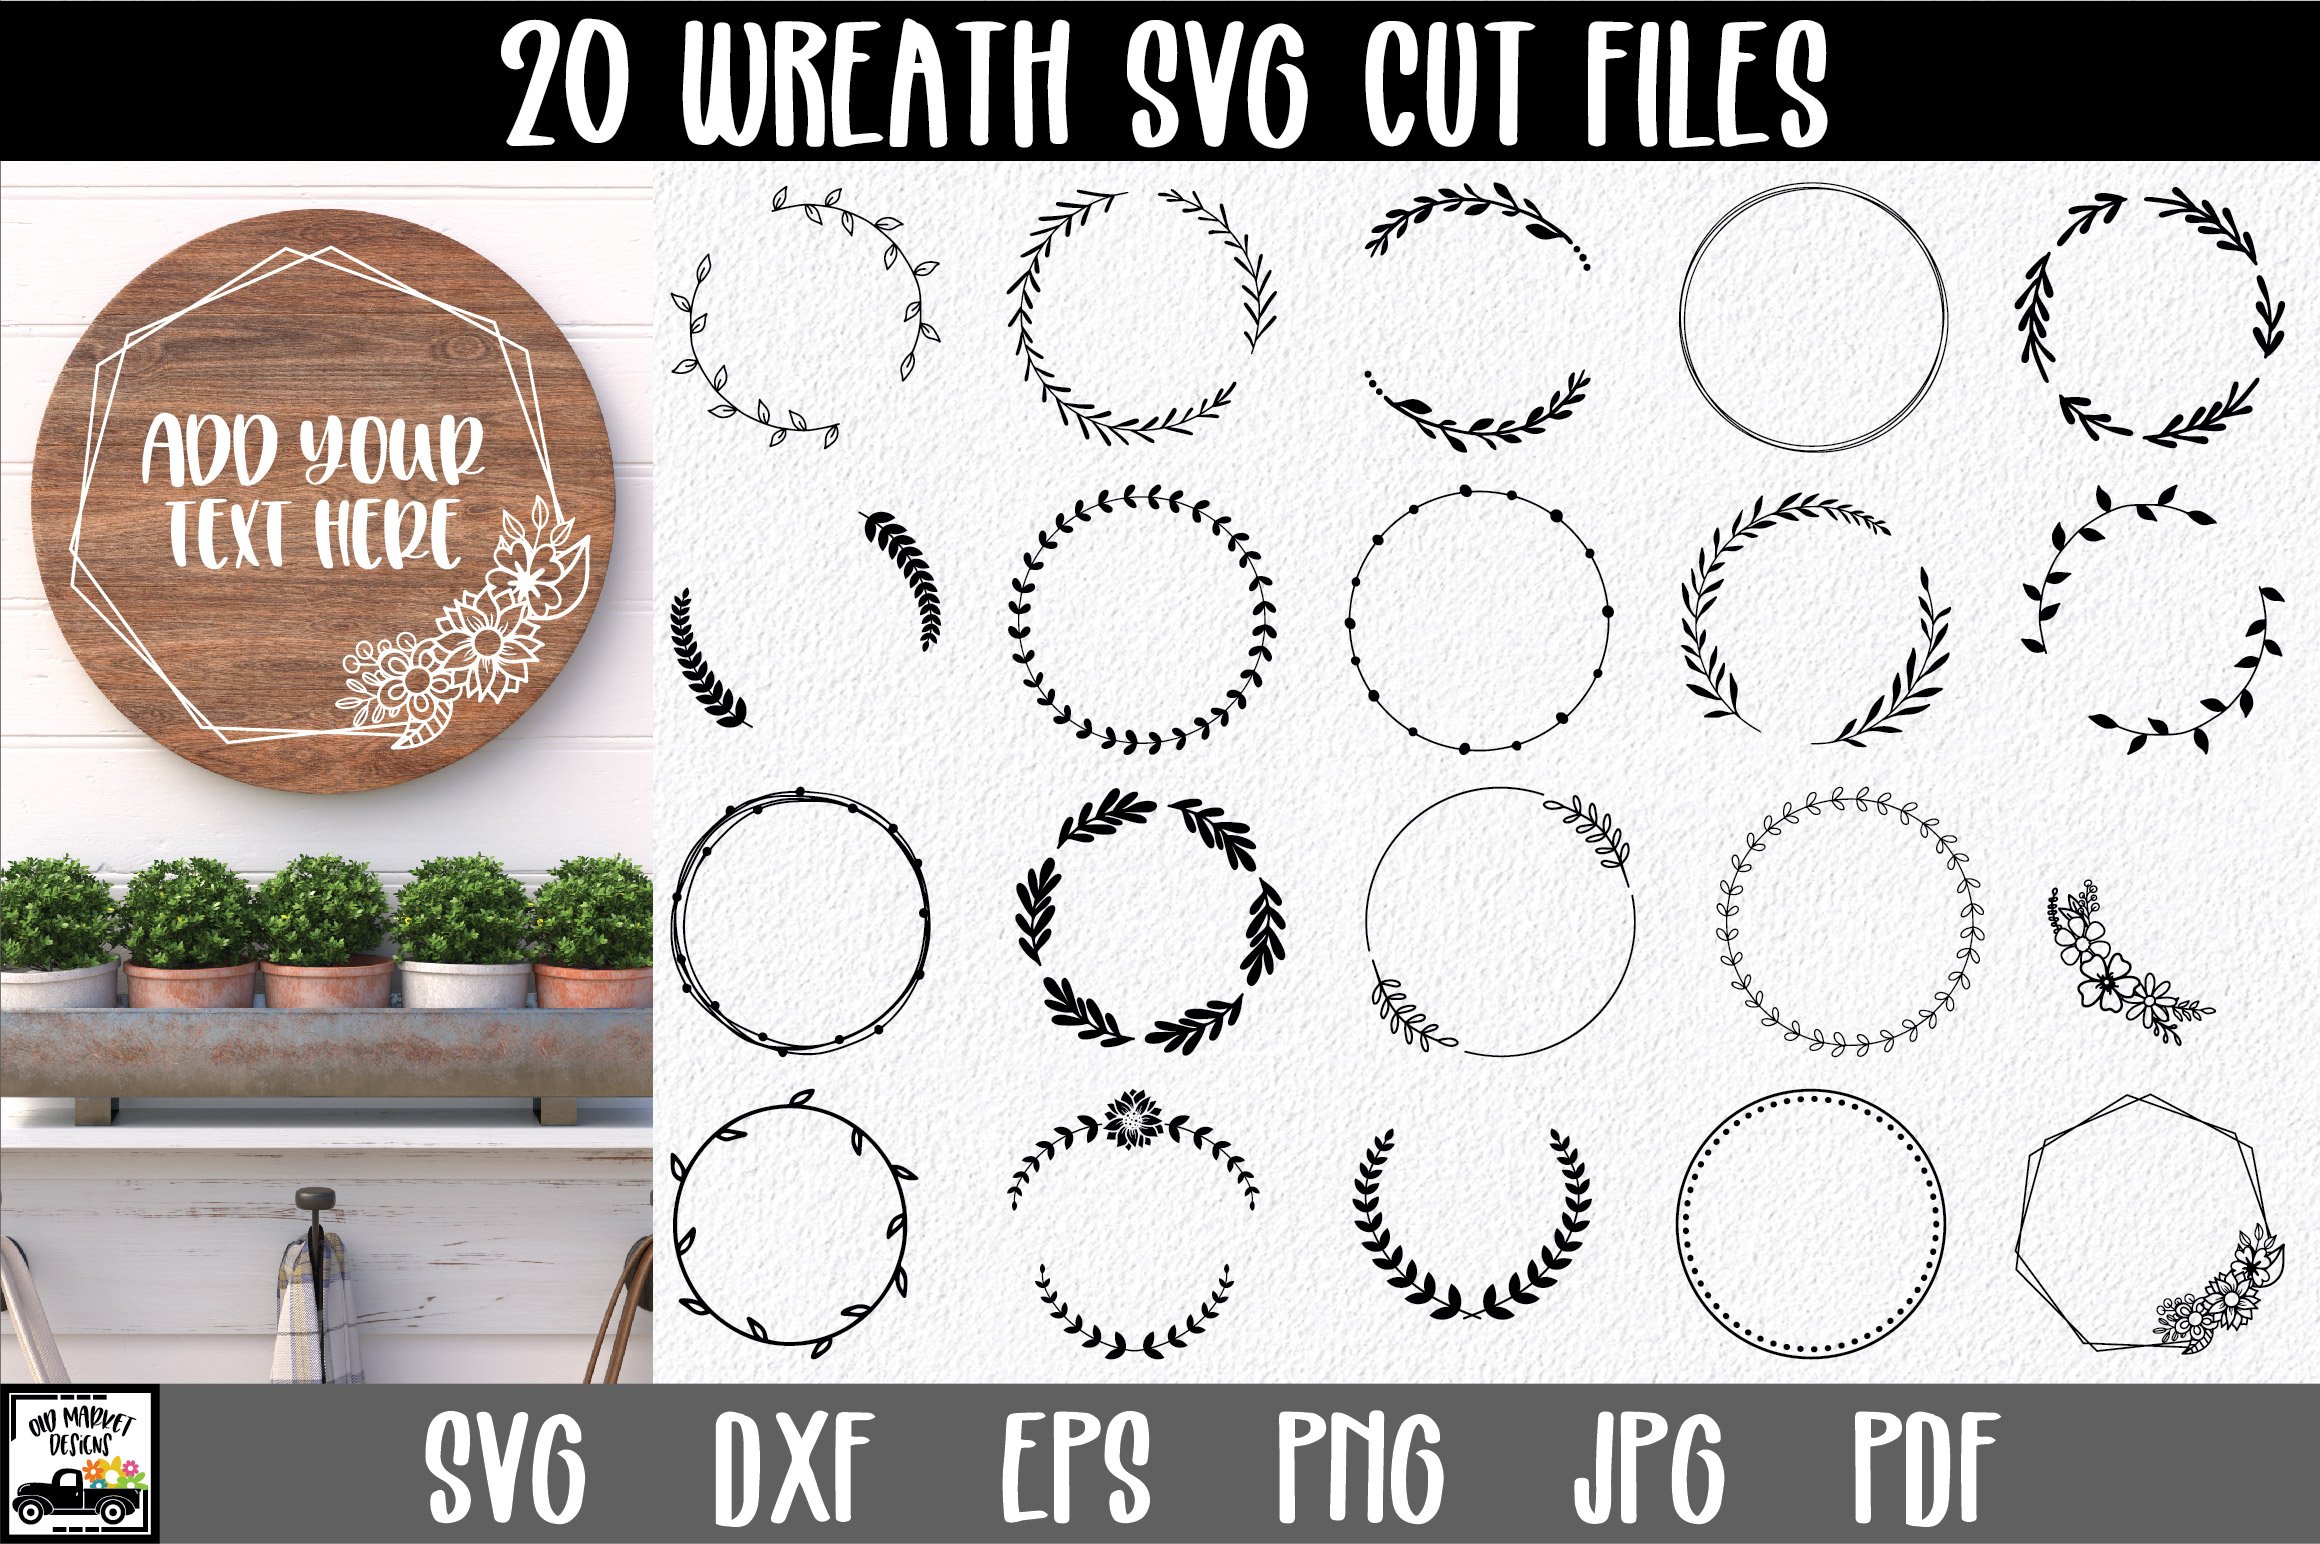 Wreath SVG cut files.